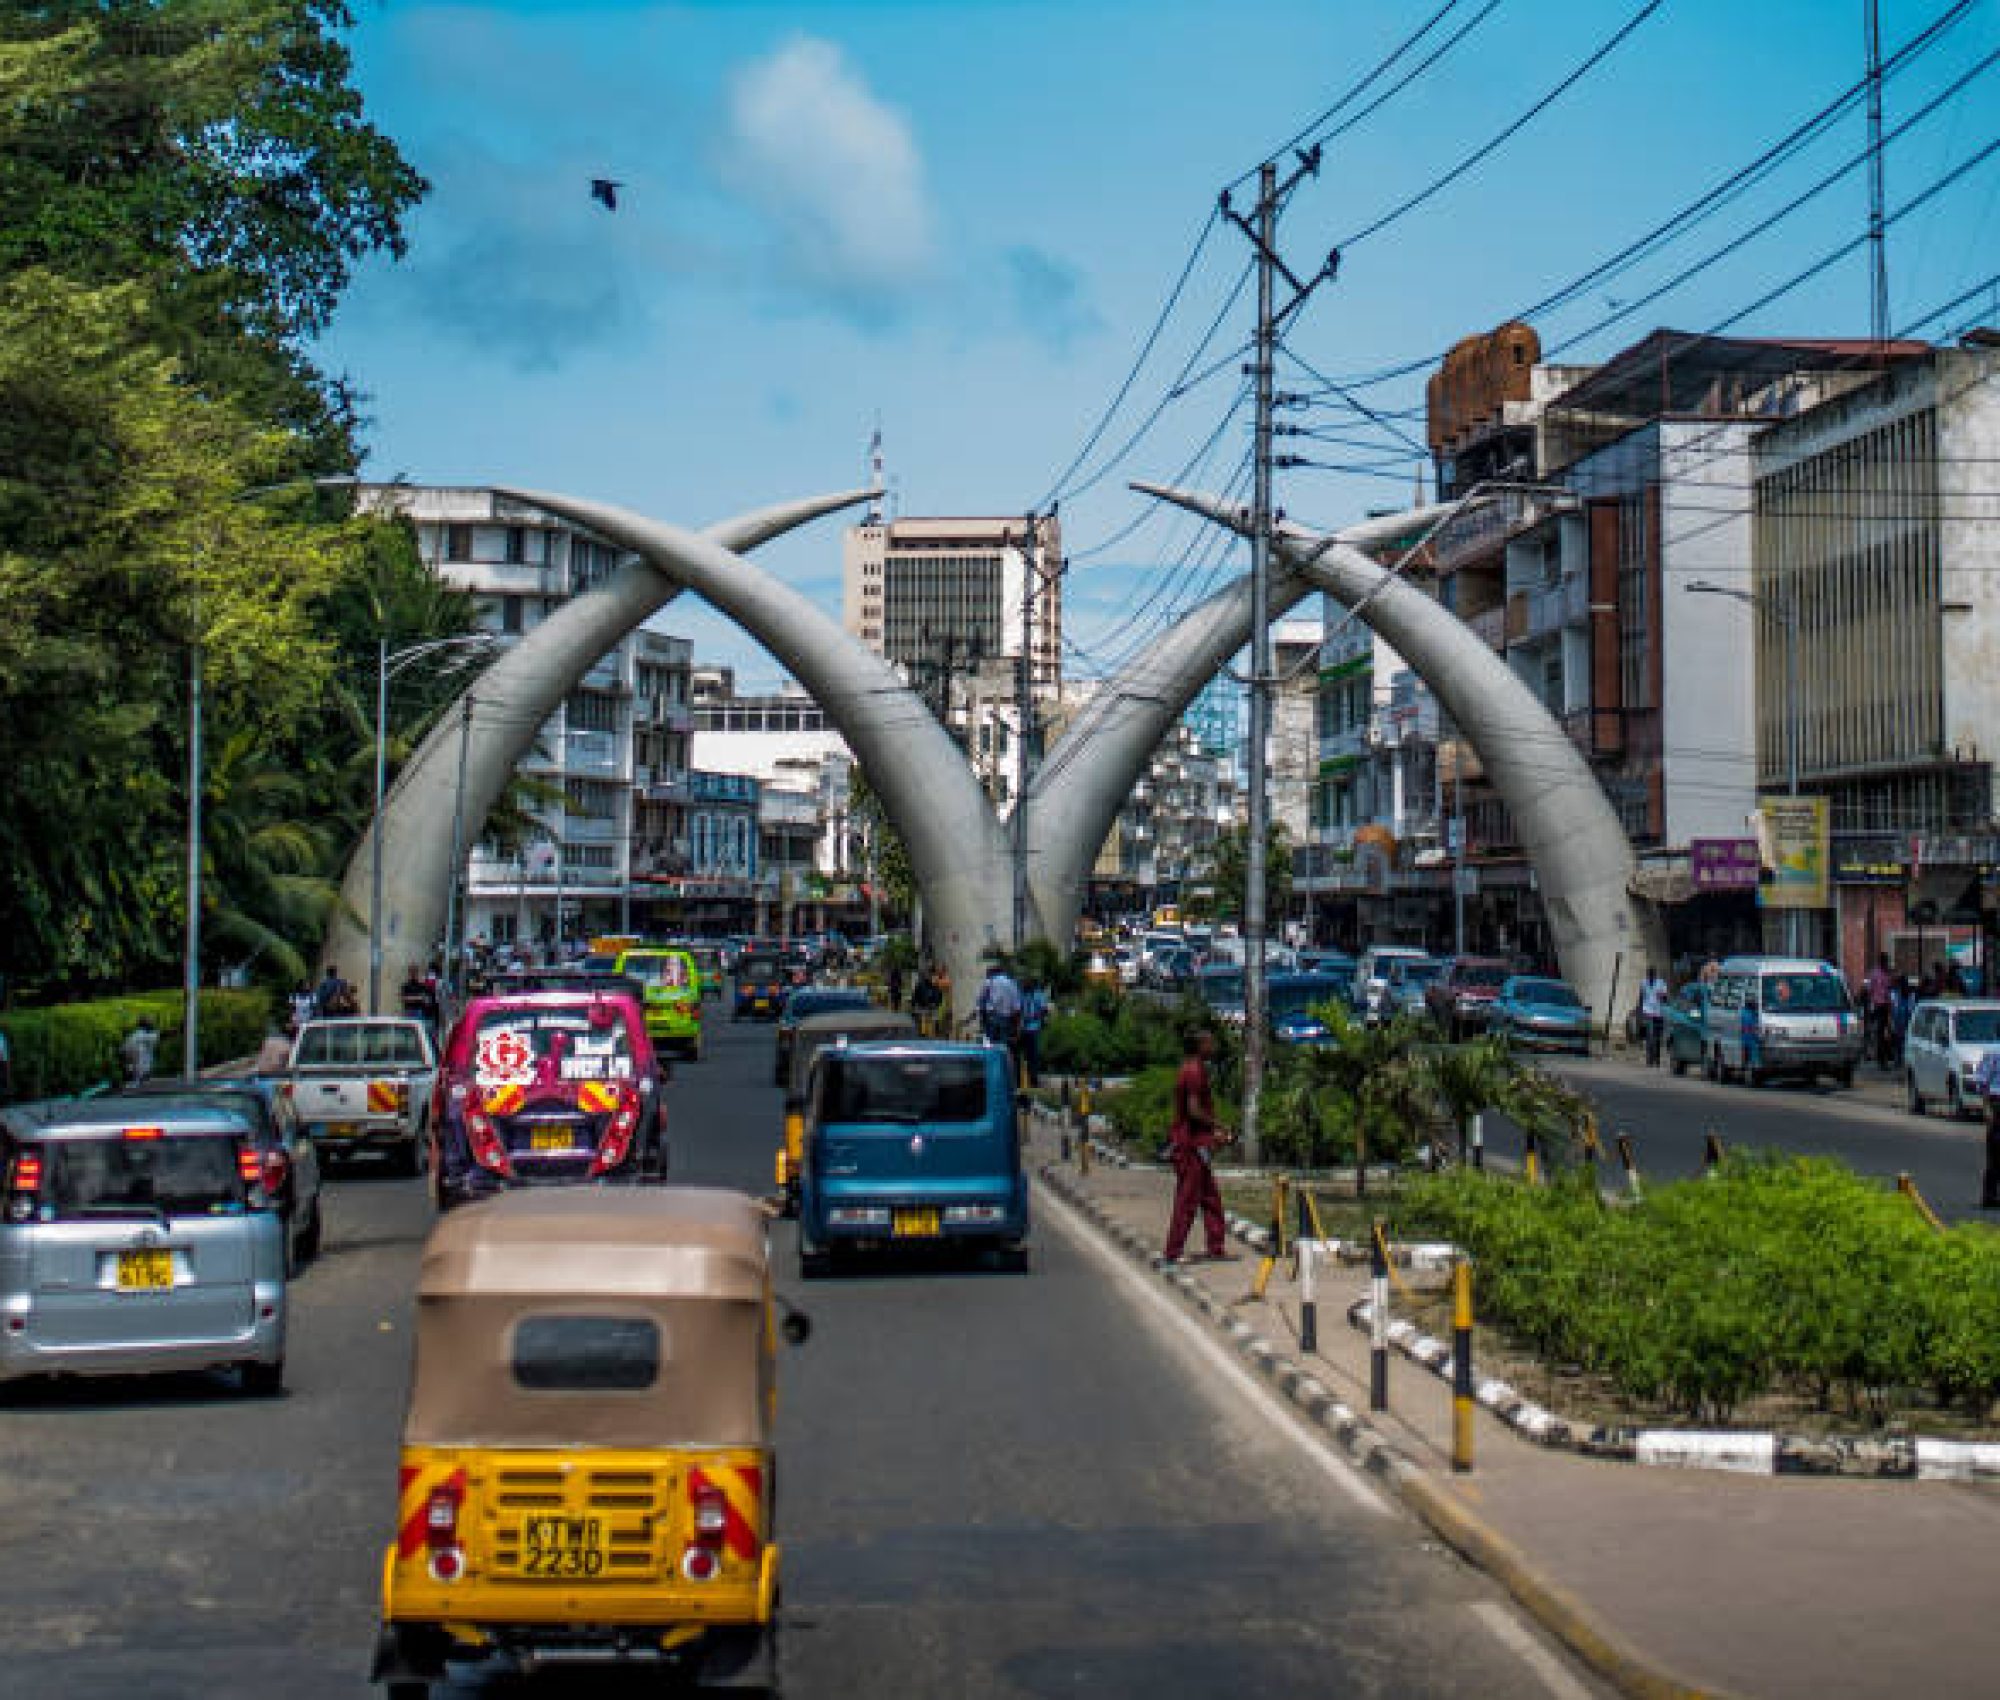 Mombasa, Kenya - September 27, 2016: The main street of Mombasa with the elephant punch memorial.